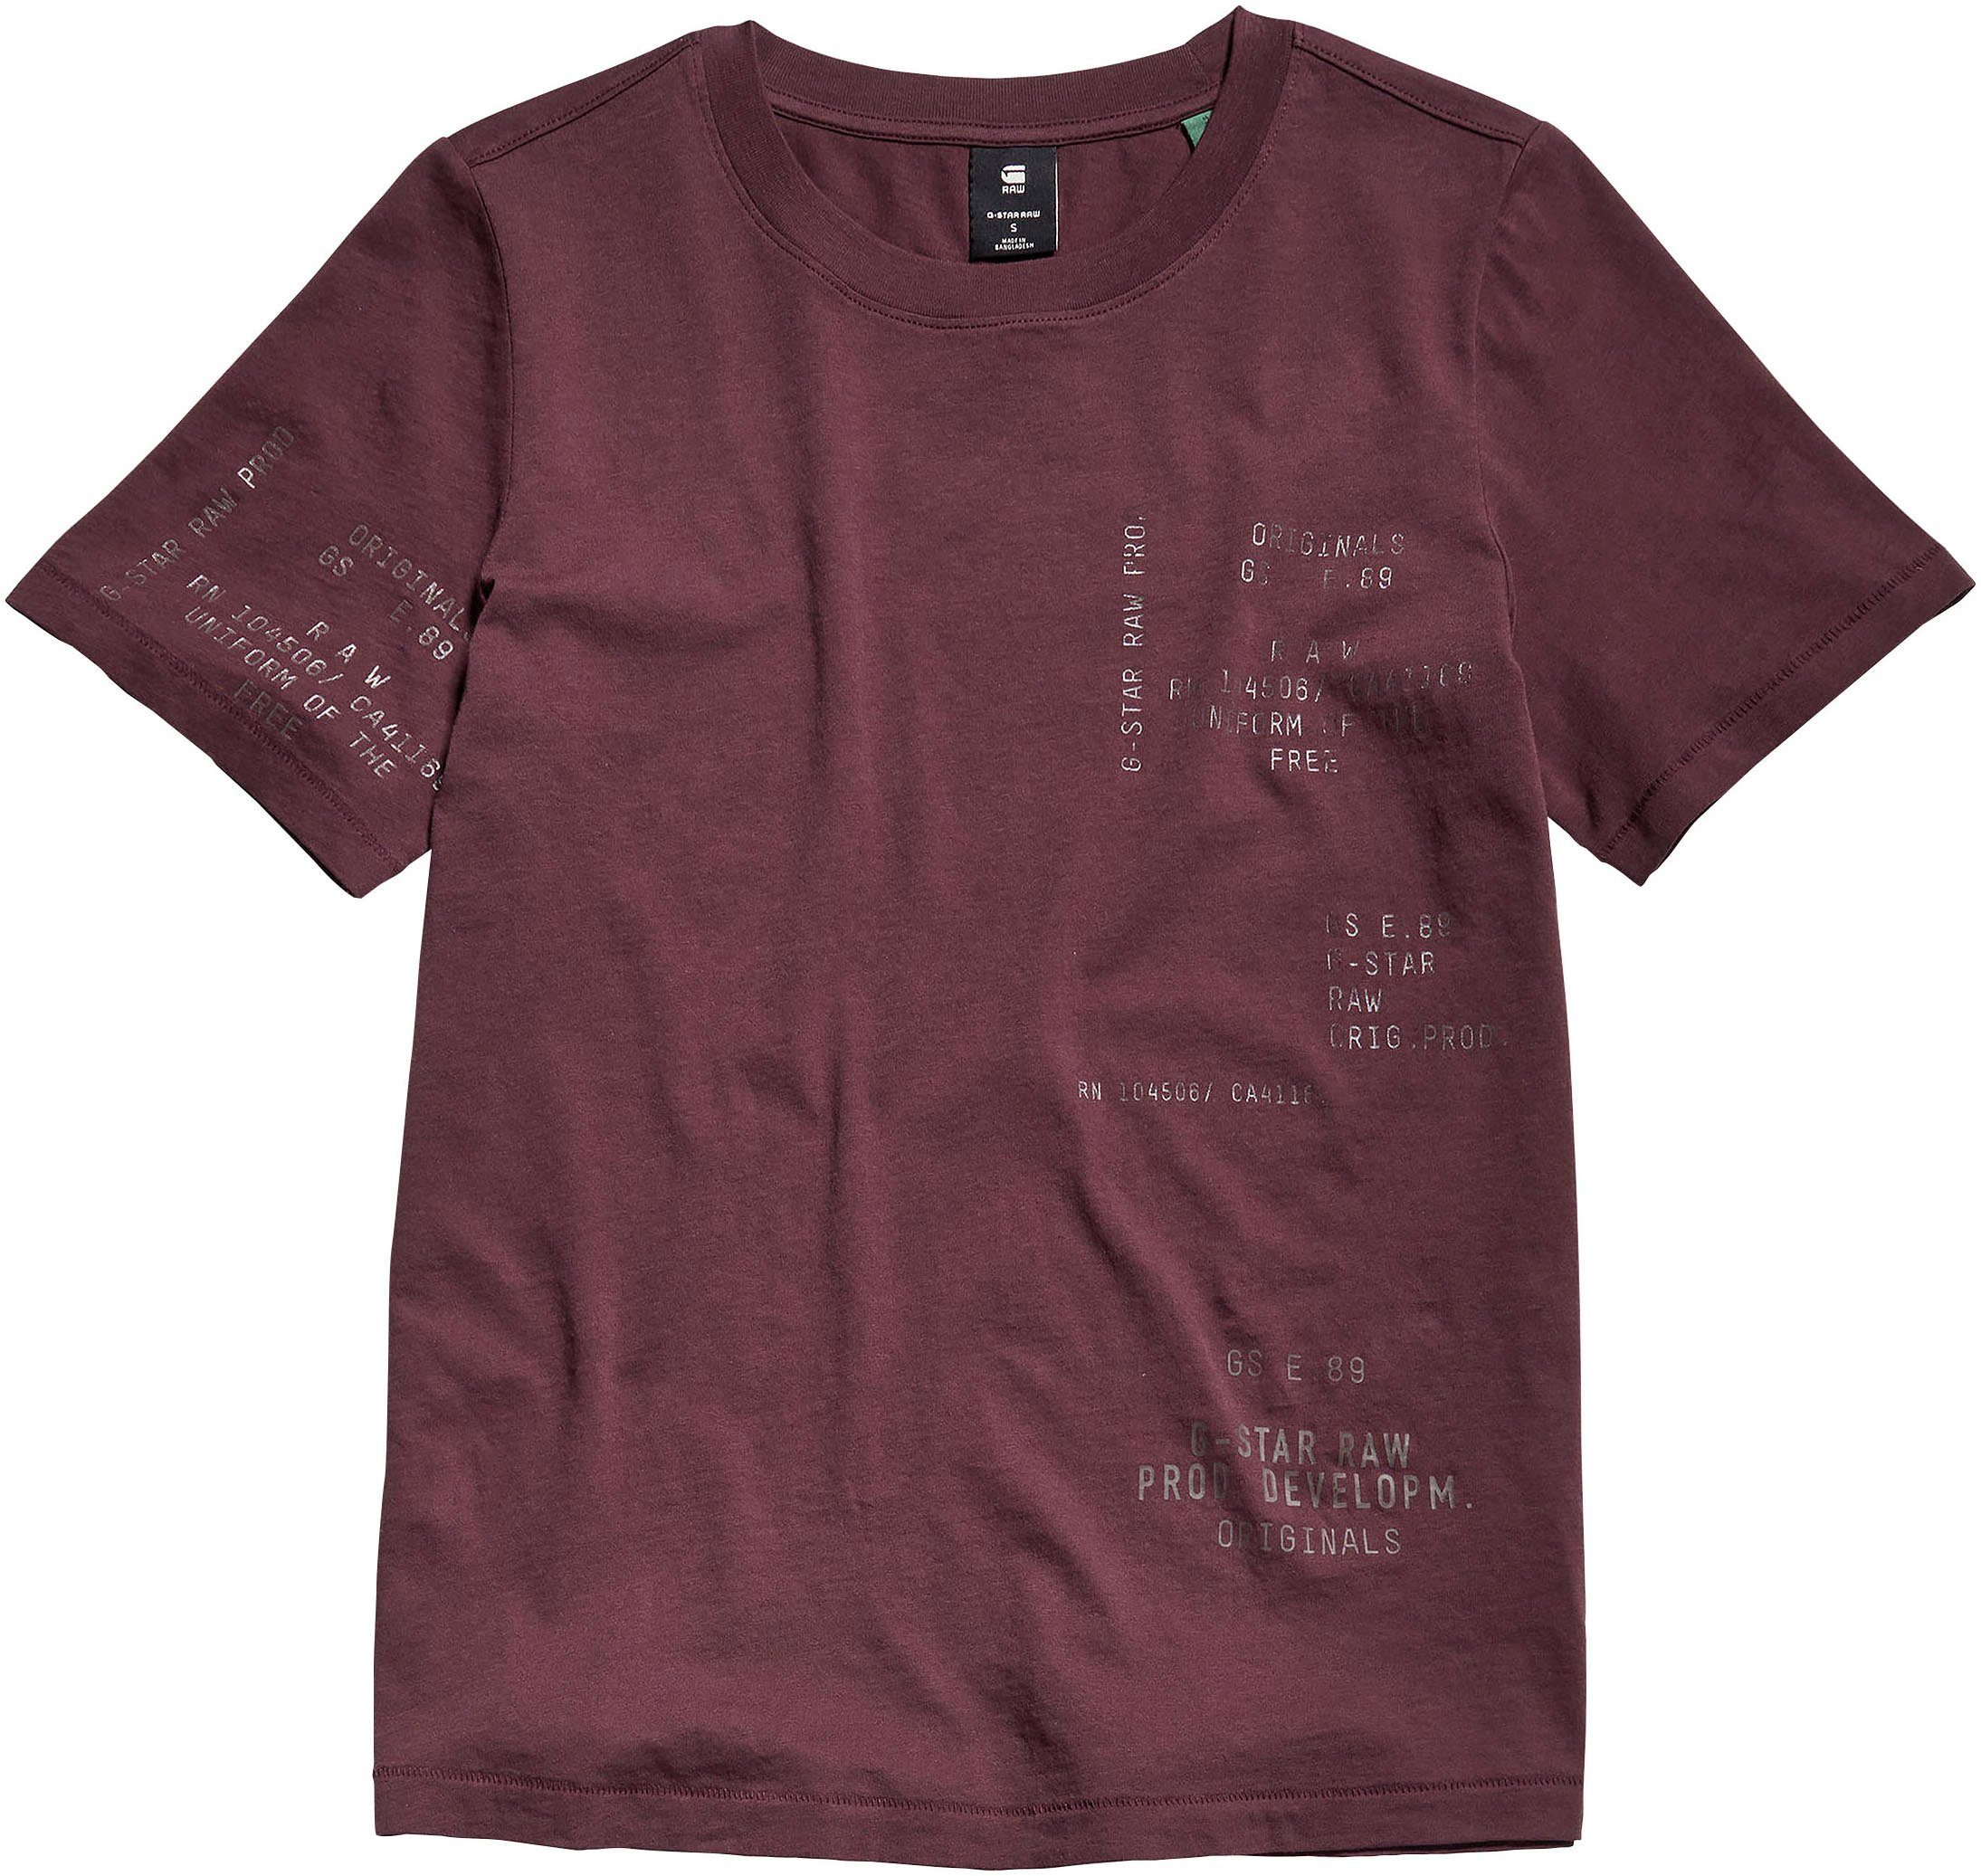 G-Star RAW wine vineyard Face T-Shirt Type